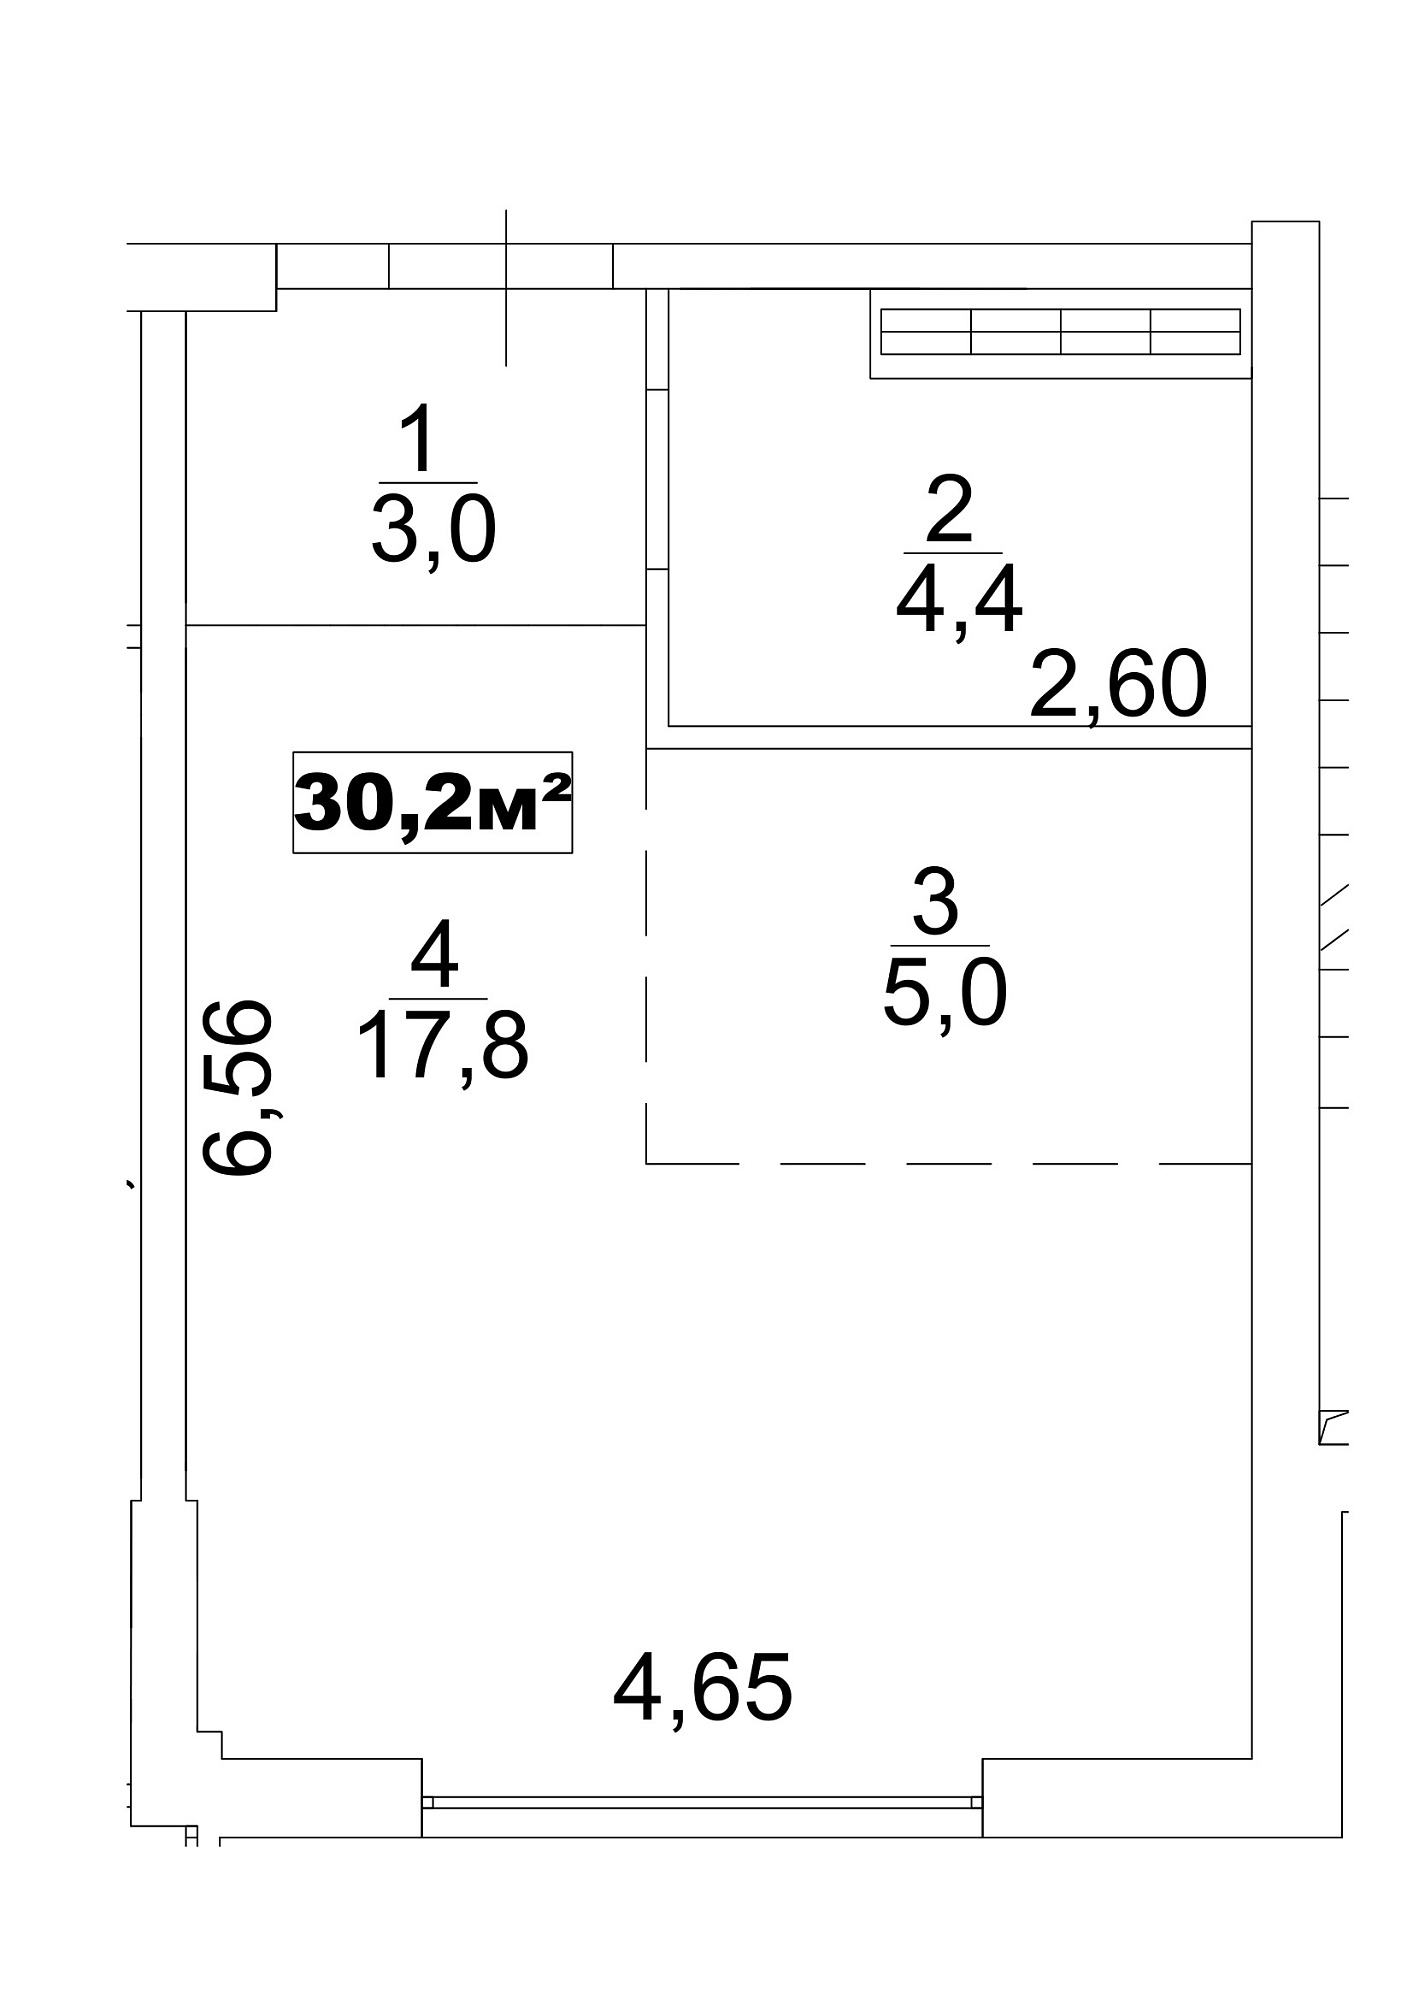 Planning Smart flats area 30.2m2, AB-13-08/0061а.